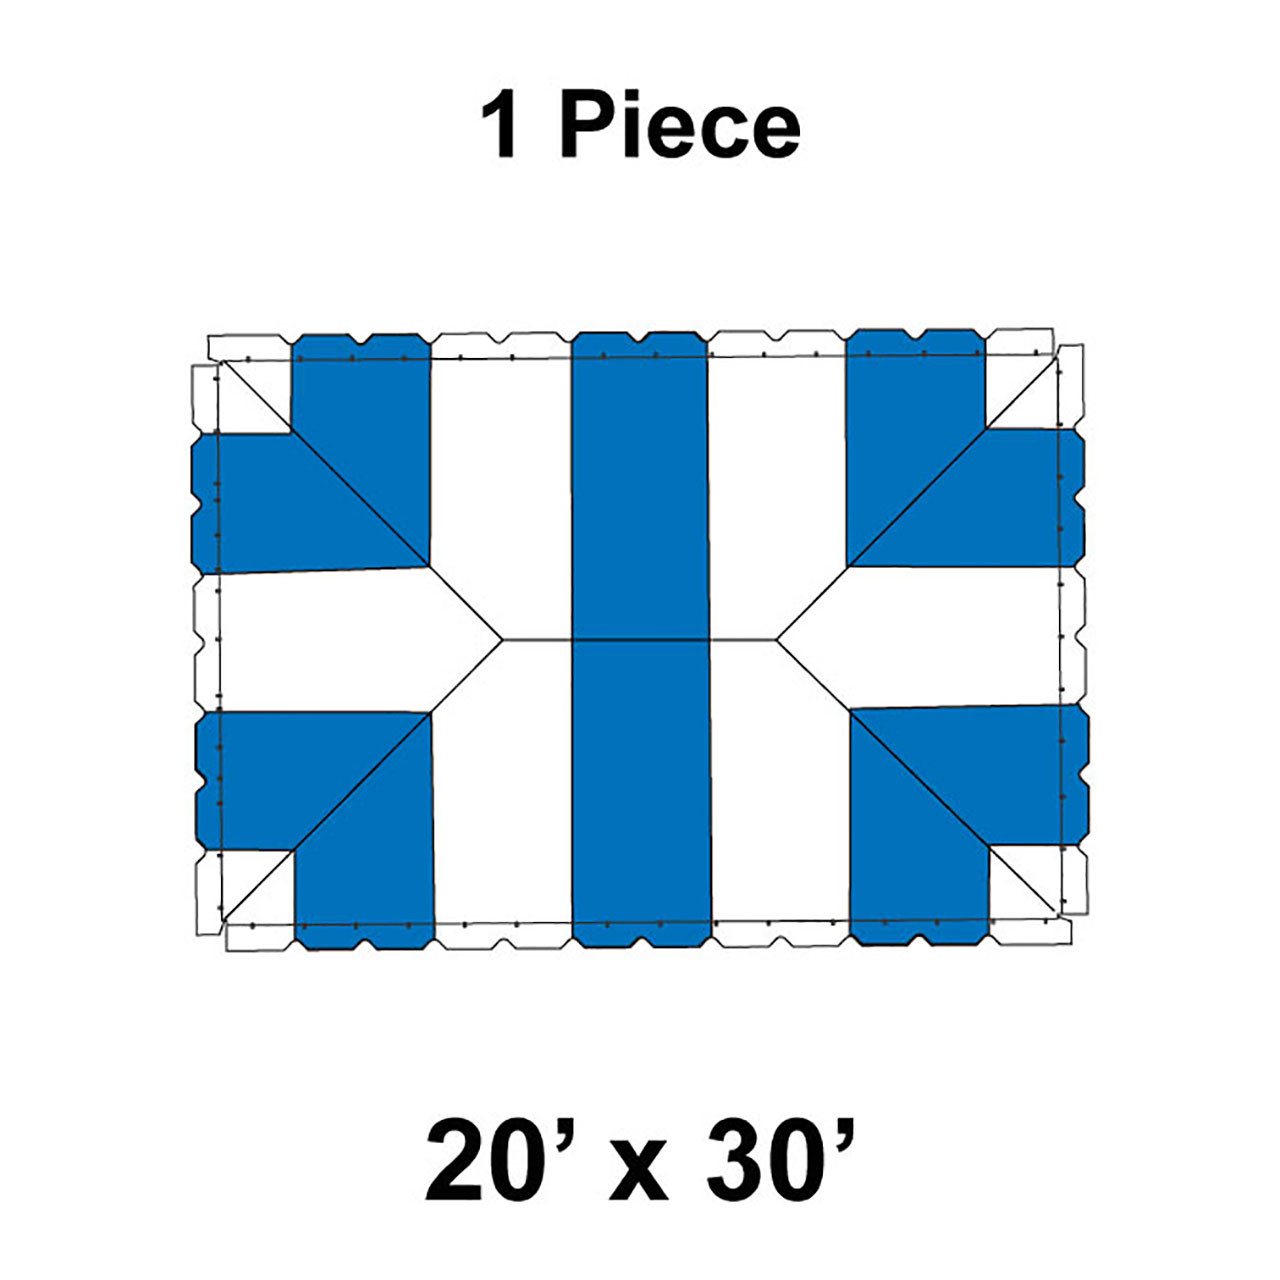 20' x 30' Classic Pole Tent, 1 Piece, 16 oz. Ratchet Top, White and Blue